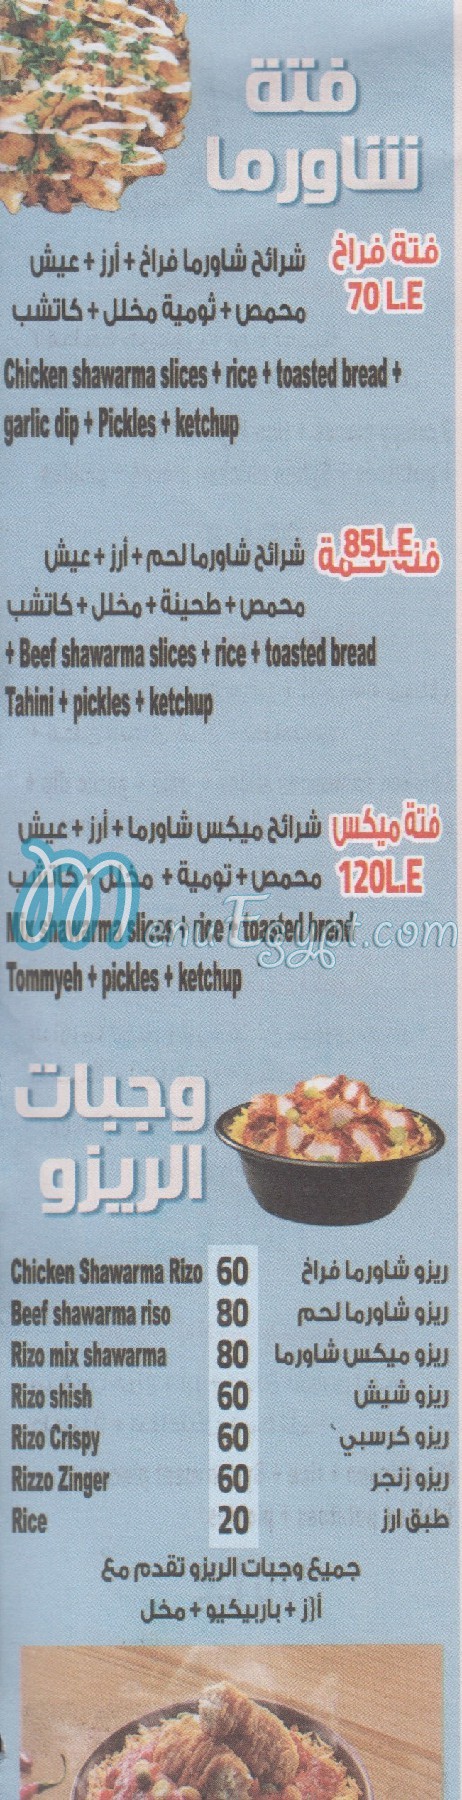 pizza el safa w el marwa menu Egypt 4